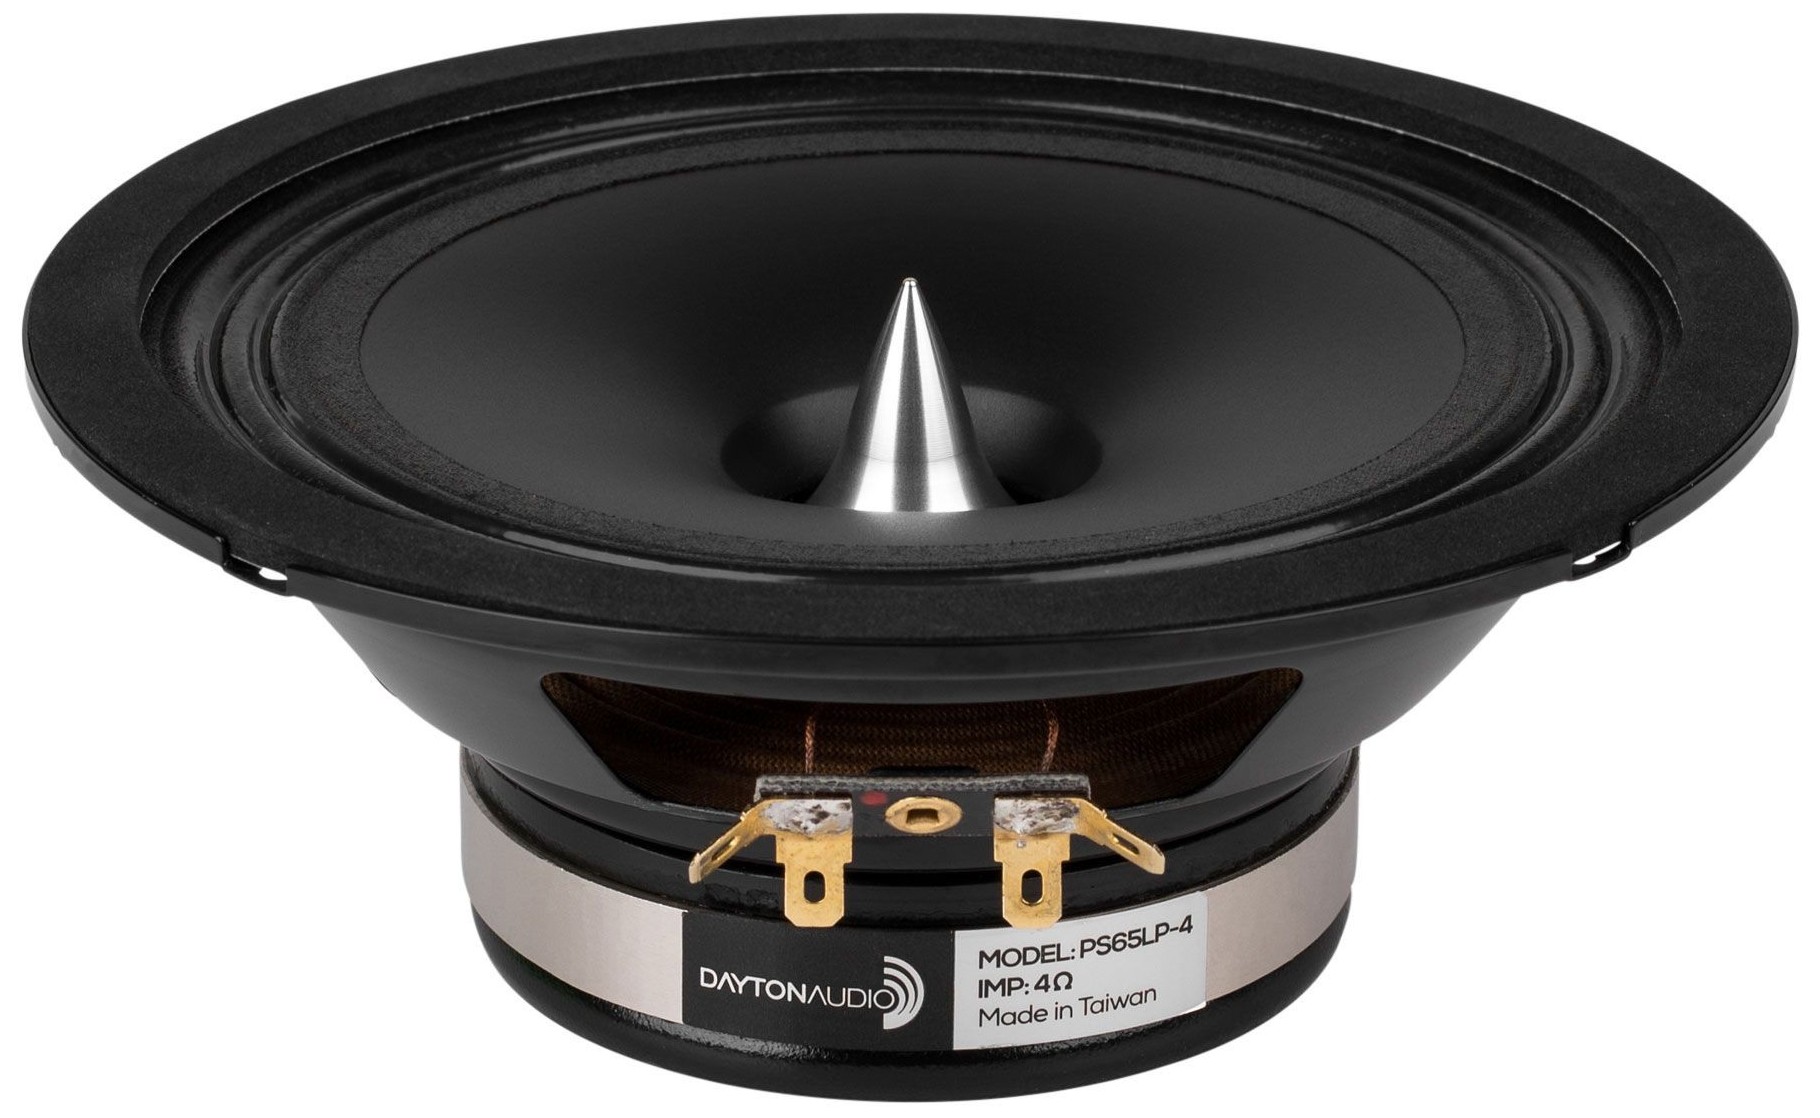 Dayton Audio PS65LP-4 Full-range